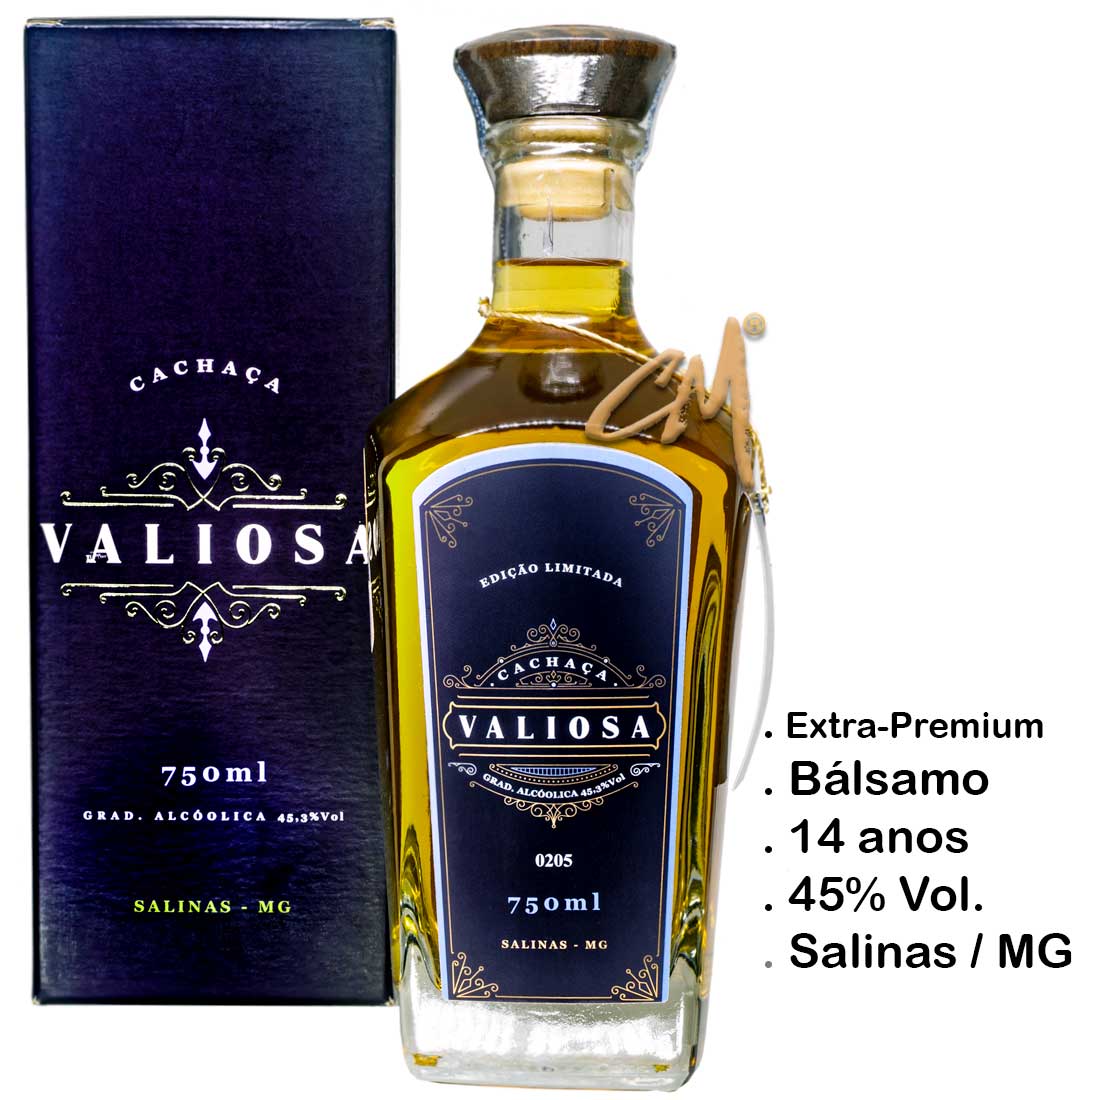 Cachaça Valiosa Edição Limitada 750 ml (Salinas - MG)